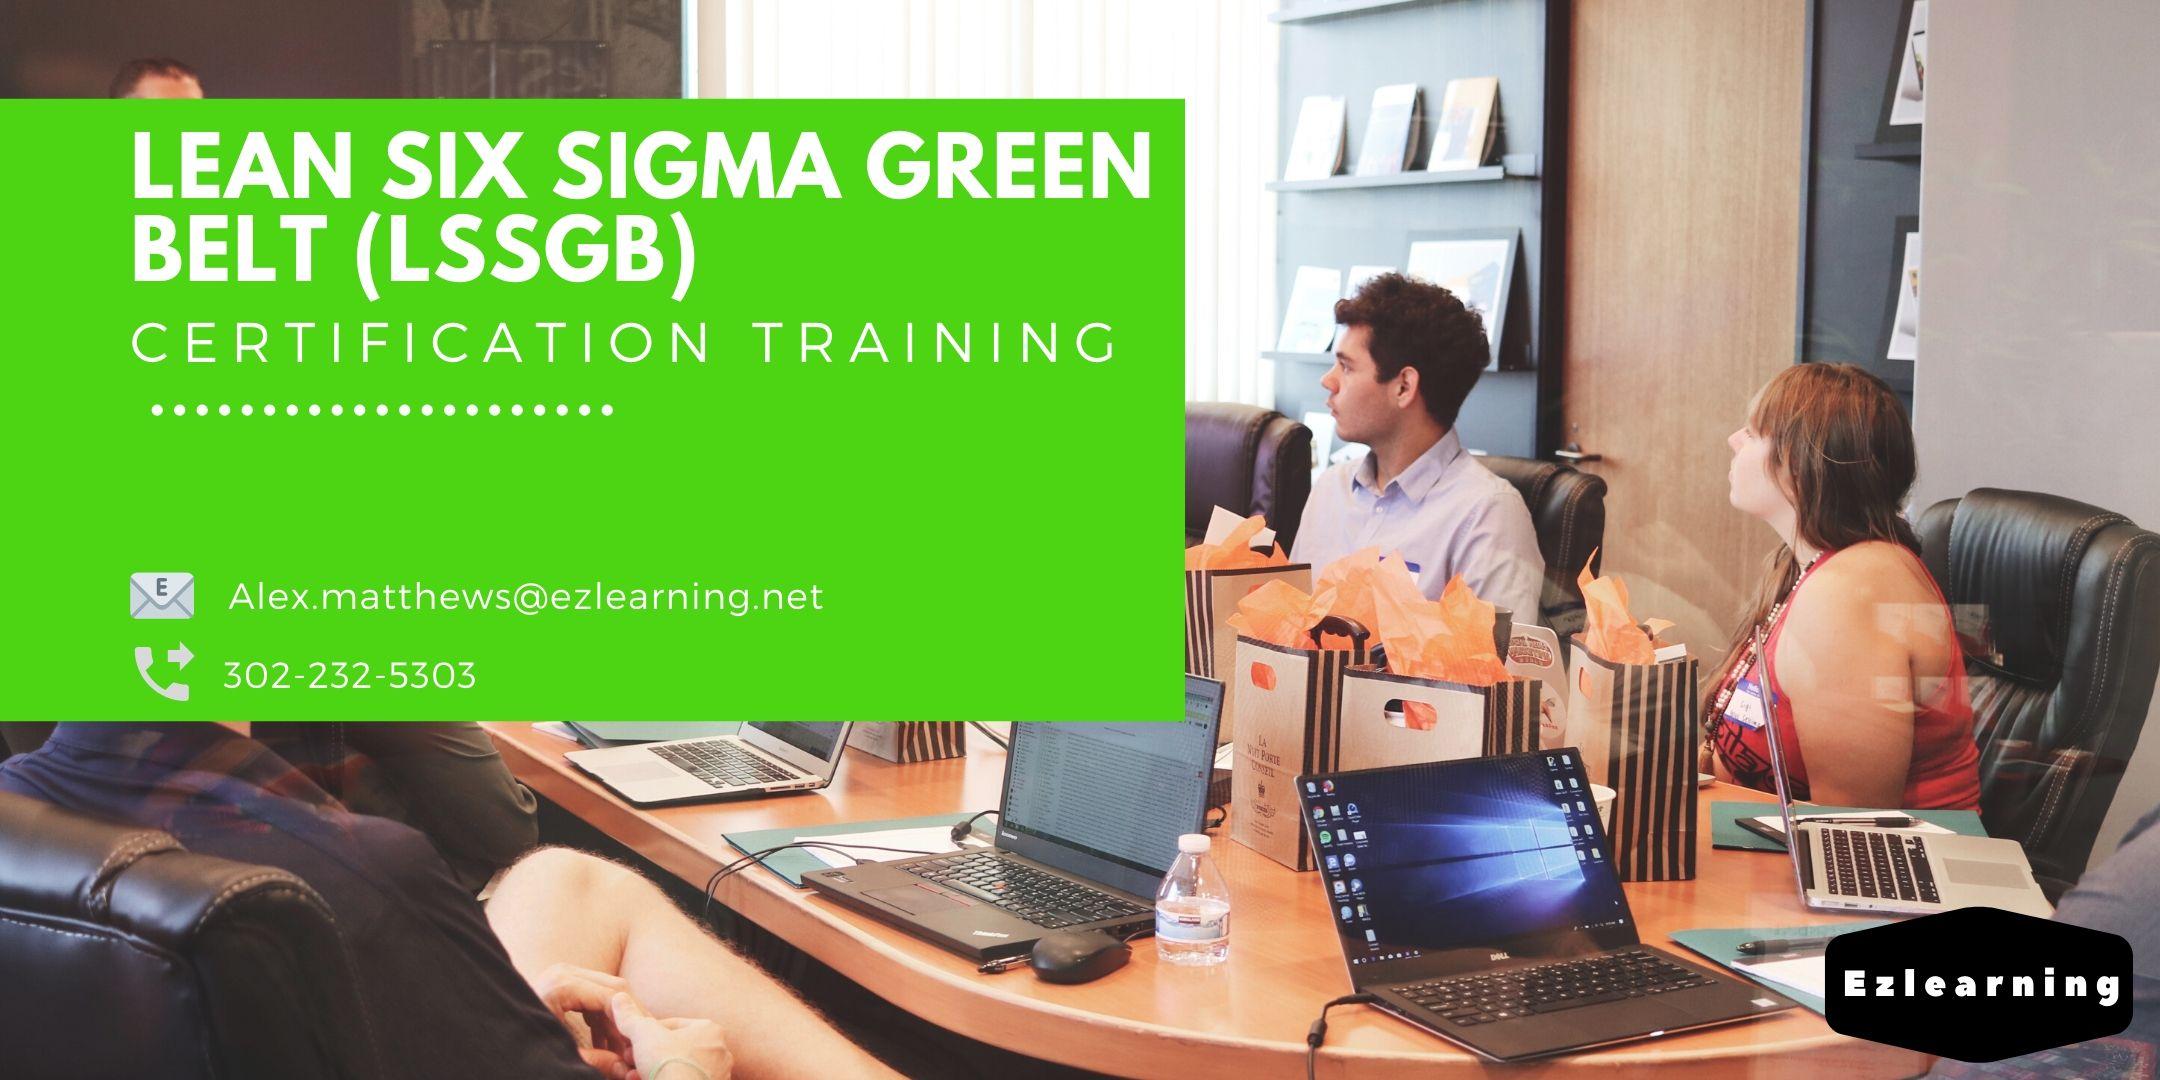 Lean Six Sigma Green Belt Certification Training in Cincinnati, OH